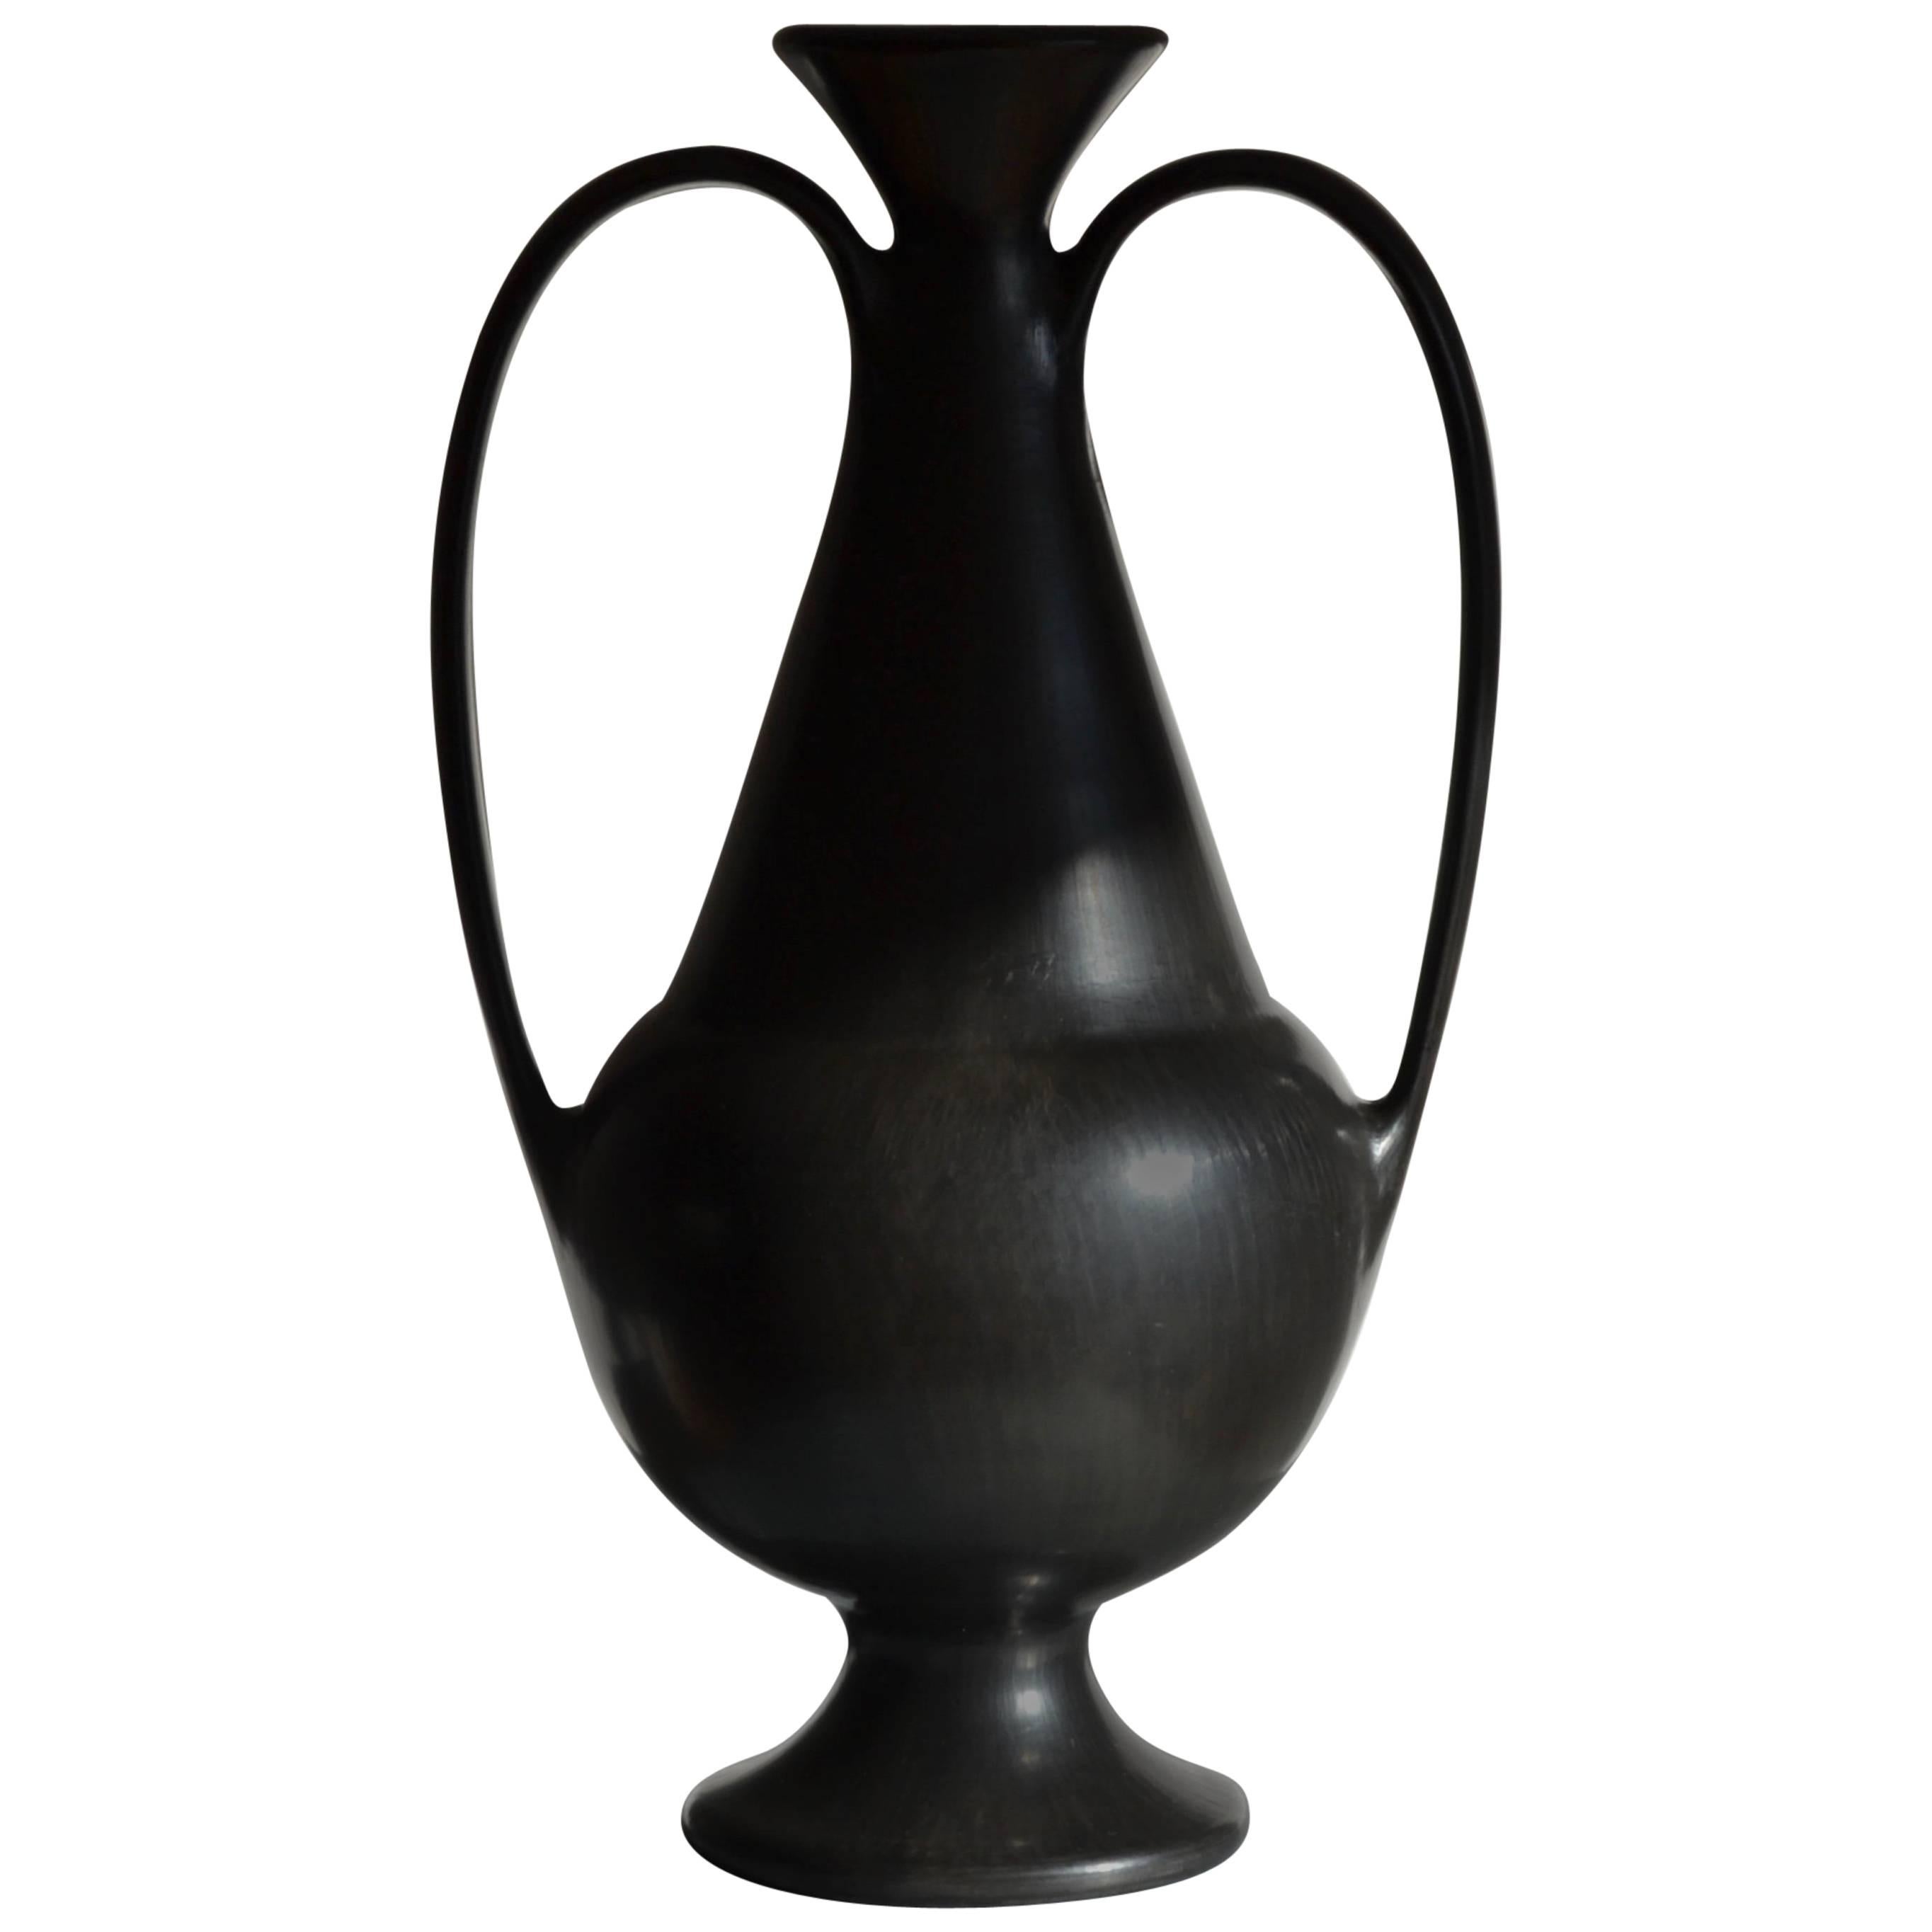 1950s Bucchero Vase by Gio Ponti